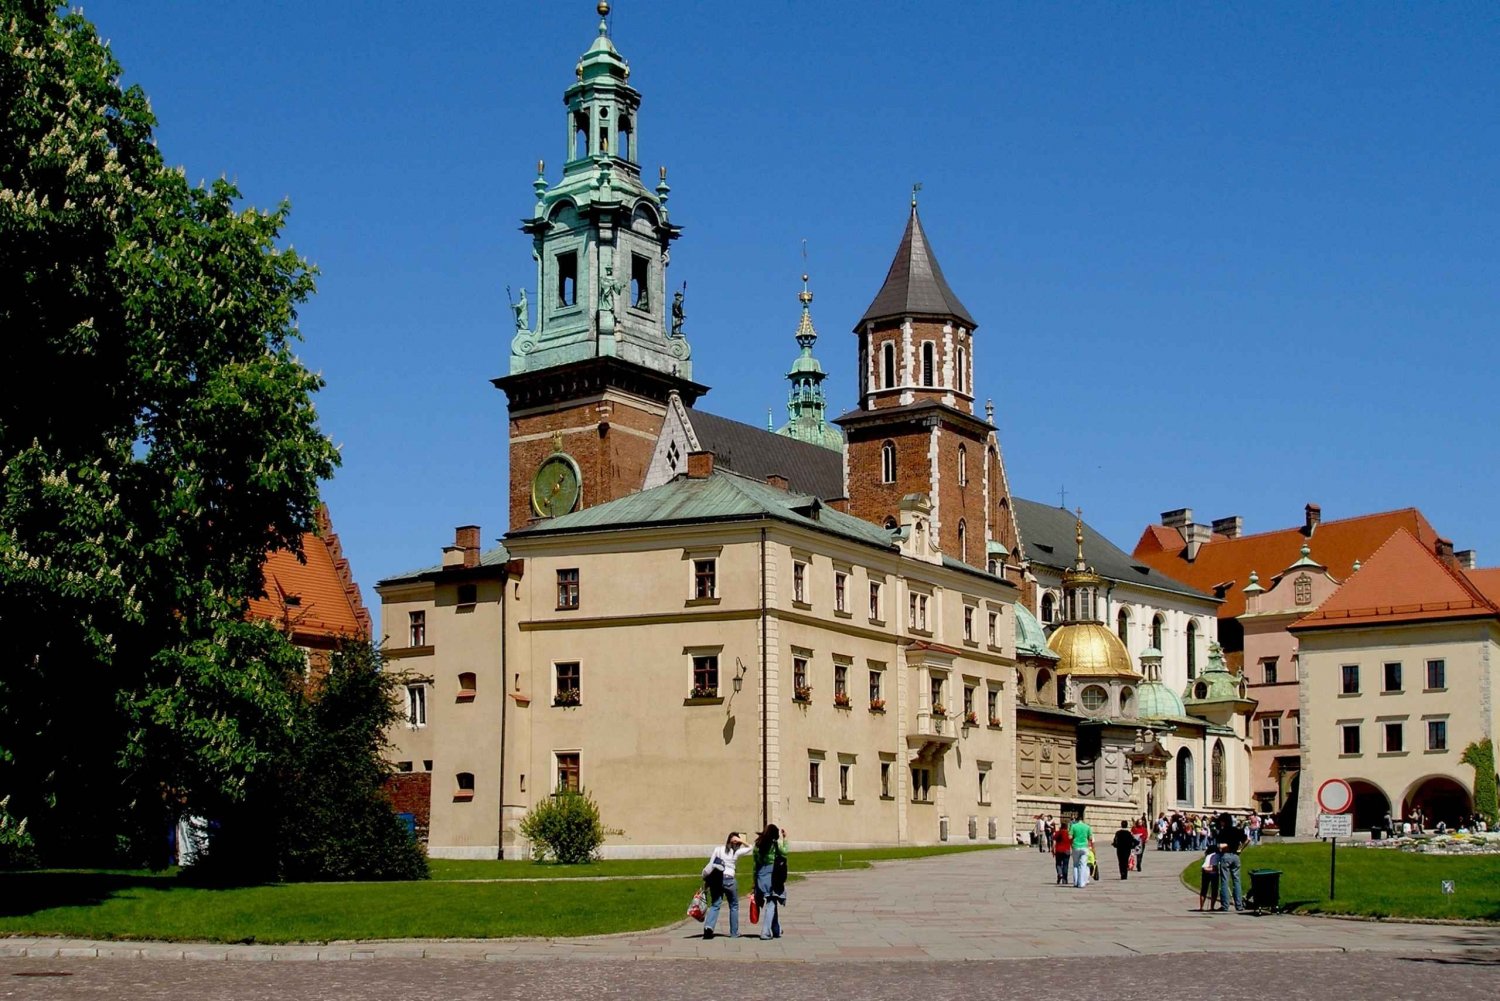 Krakova: Wieliczkan suolakaivos: Wawelin linna, juutalaiskortteli, Wieliczkan suolakaivos.